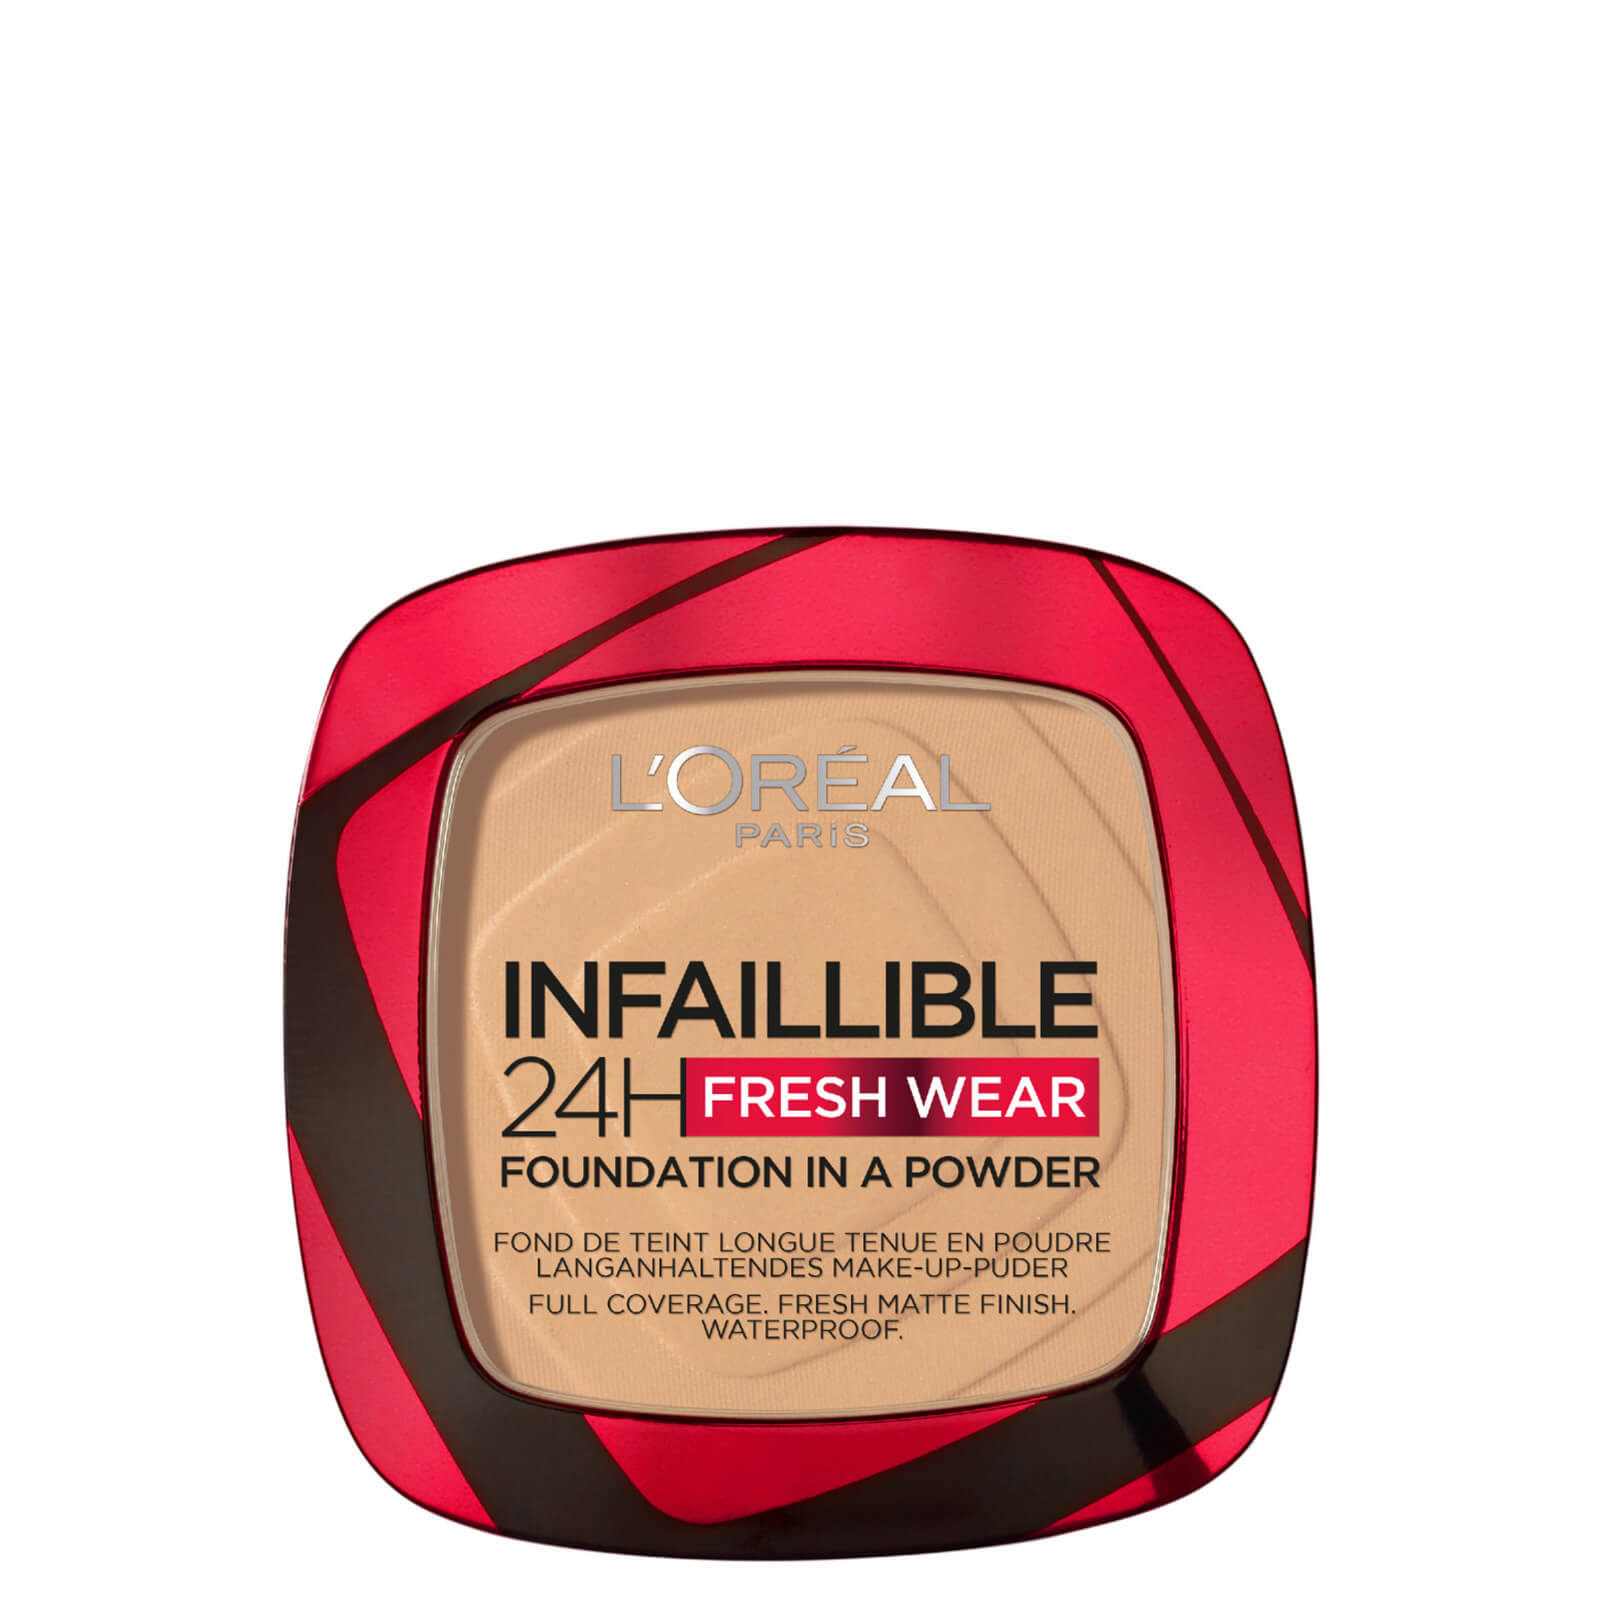 L'Oréal Paris Infallible 24H Fresh Wear Foundation in a Powder 9g 200-Golden Sand